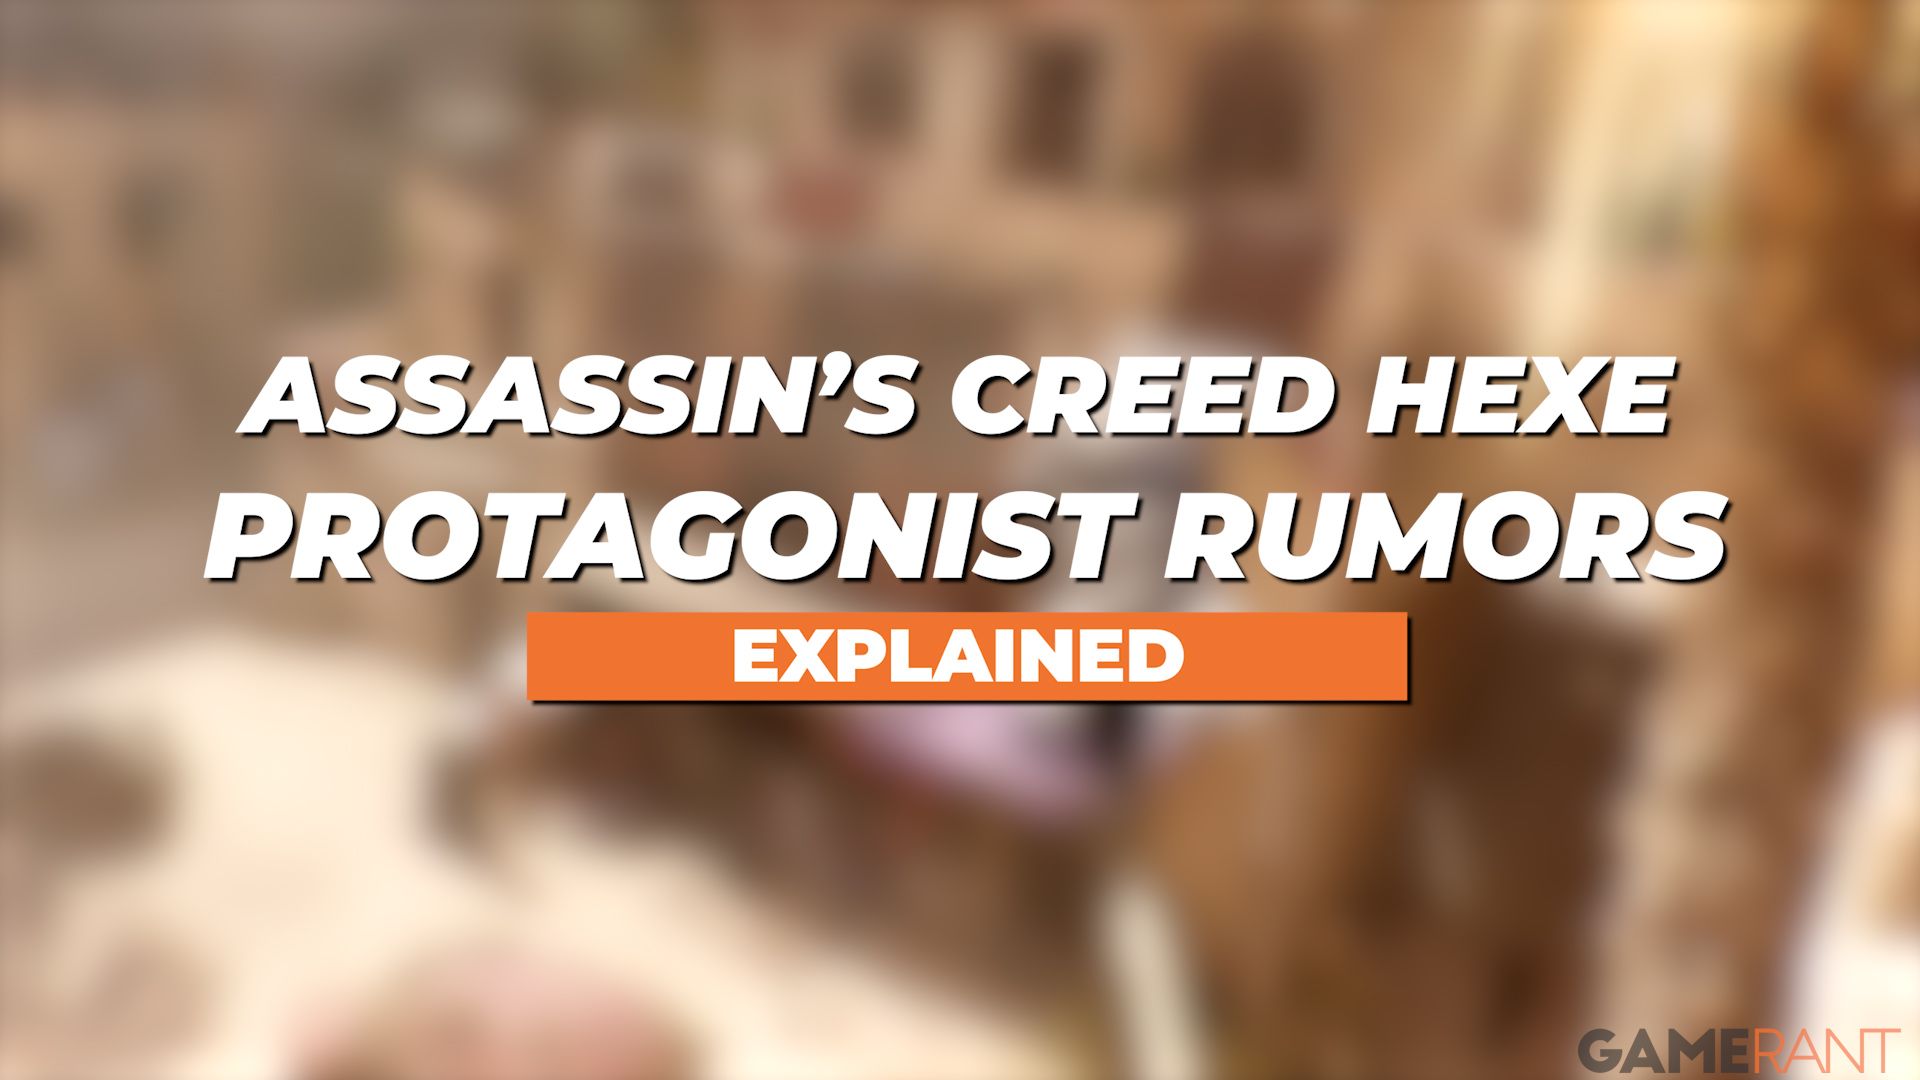 Assasisn Creed Hexe Rumors Explained